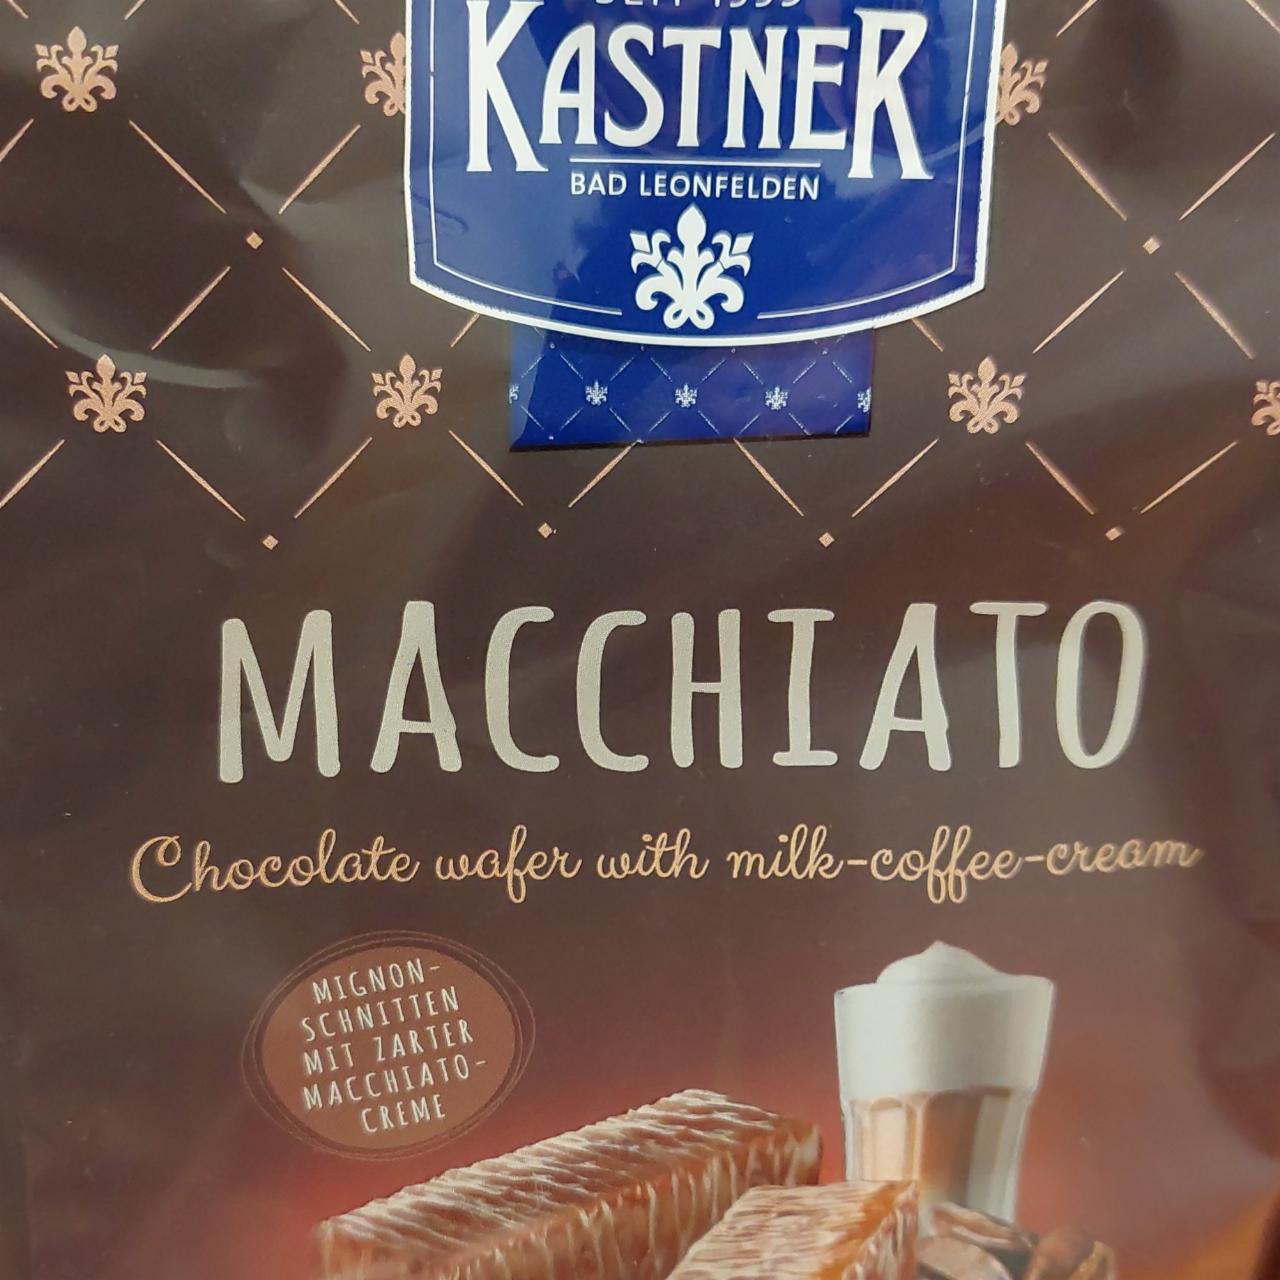 Fotografie - Macchiato chocolate wafer with milk-coffee-cream Kastner